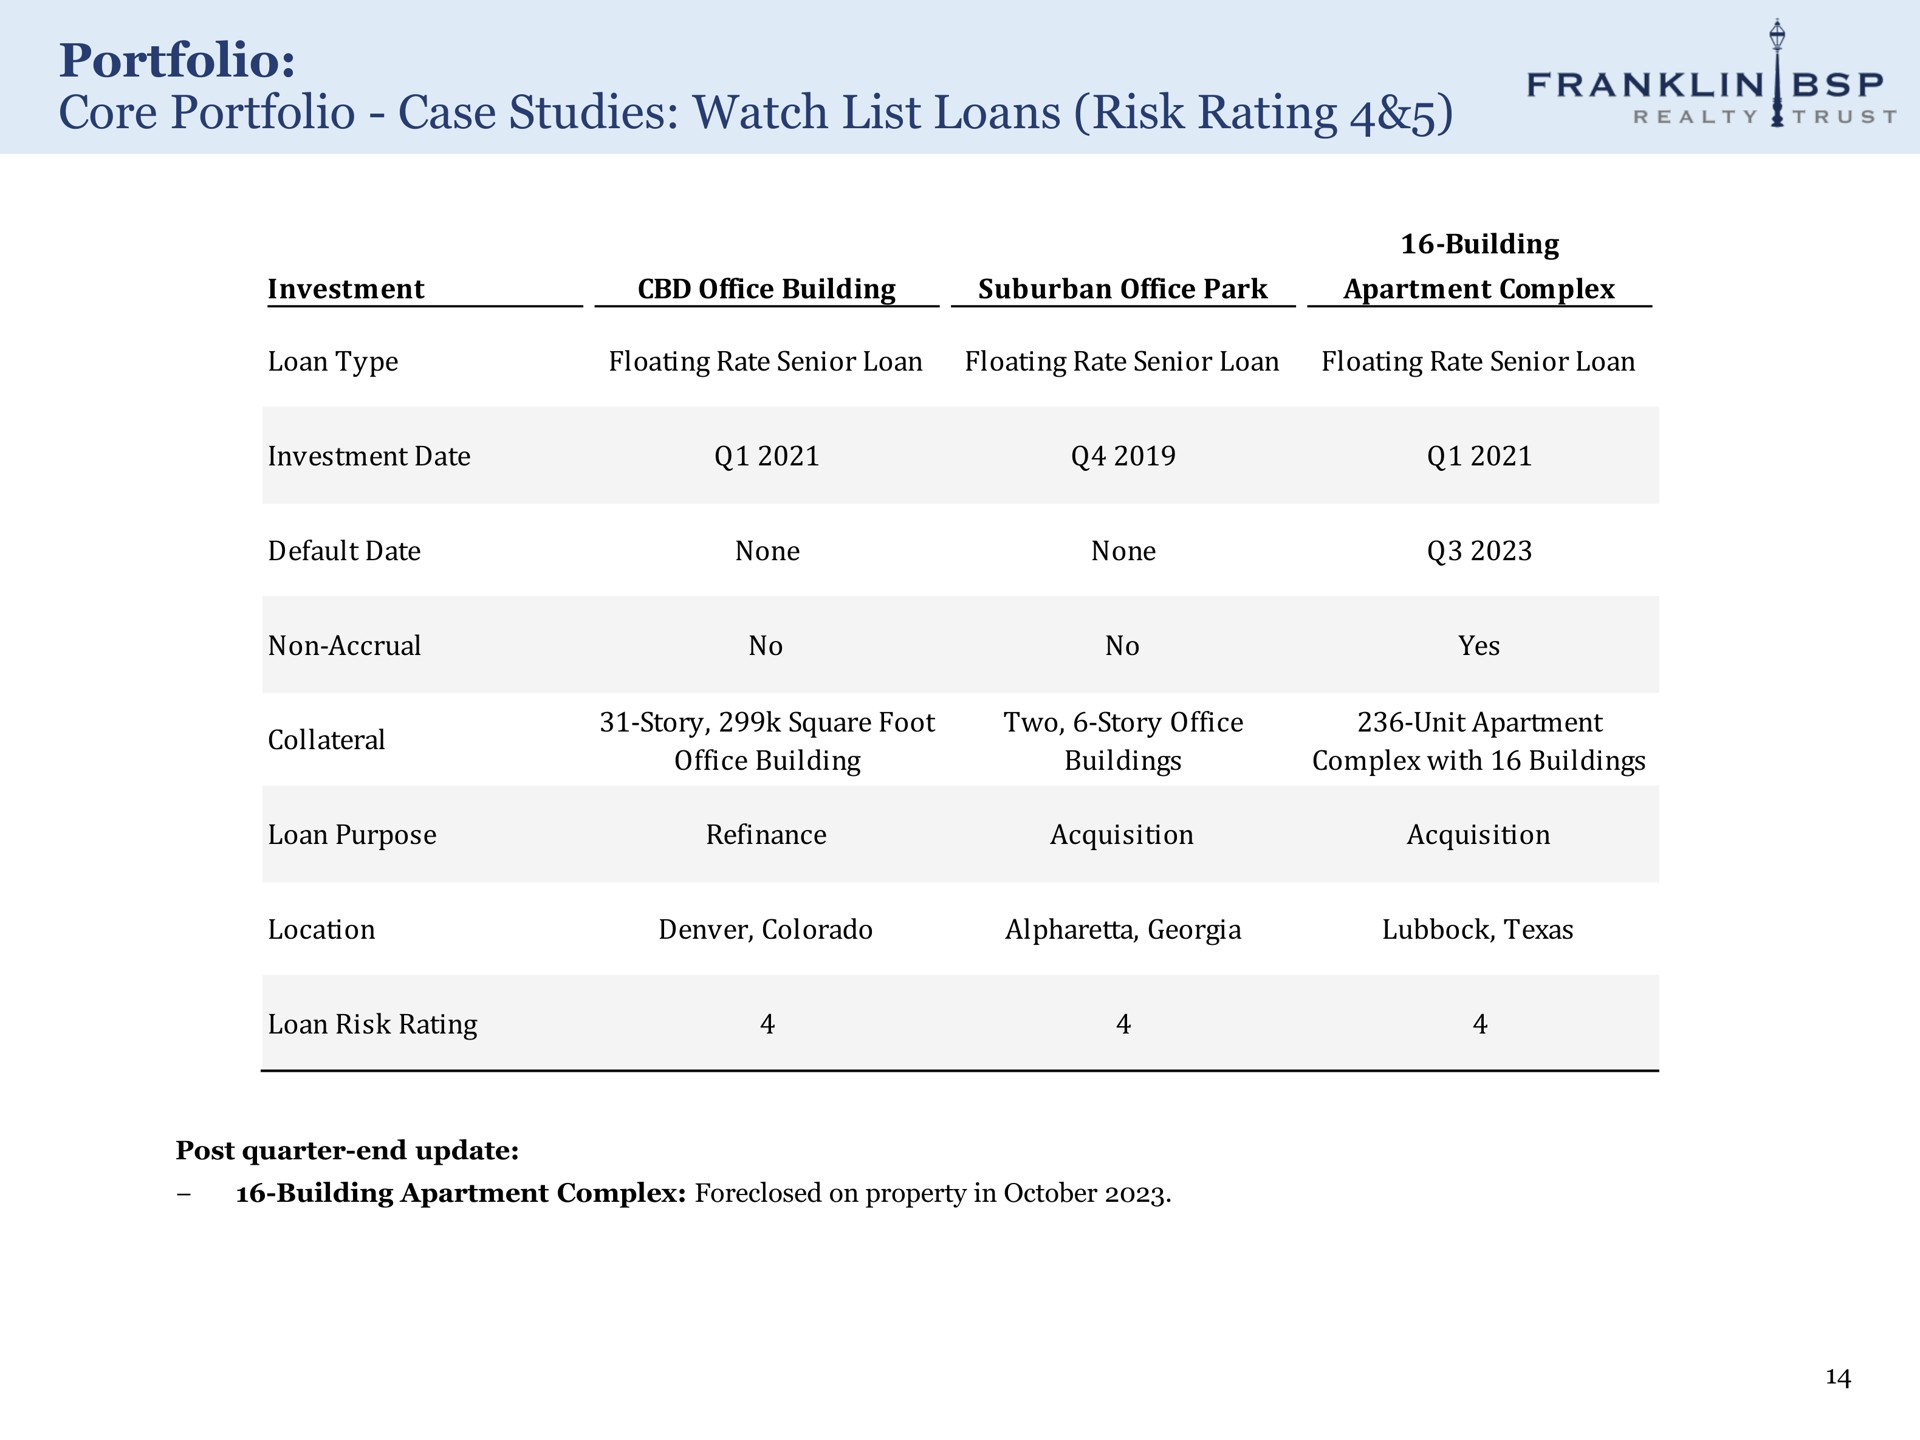 portfolio core portfolio case studies watch list loans risk rating franklin trust realty | Franklin BSP Realty Trust